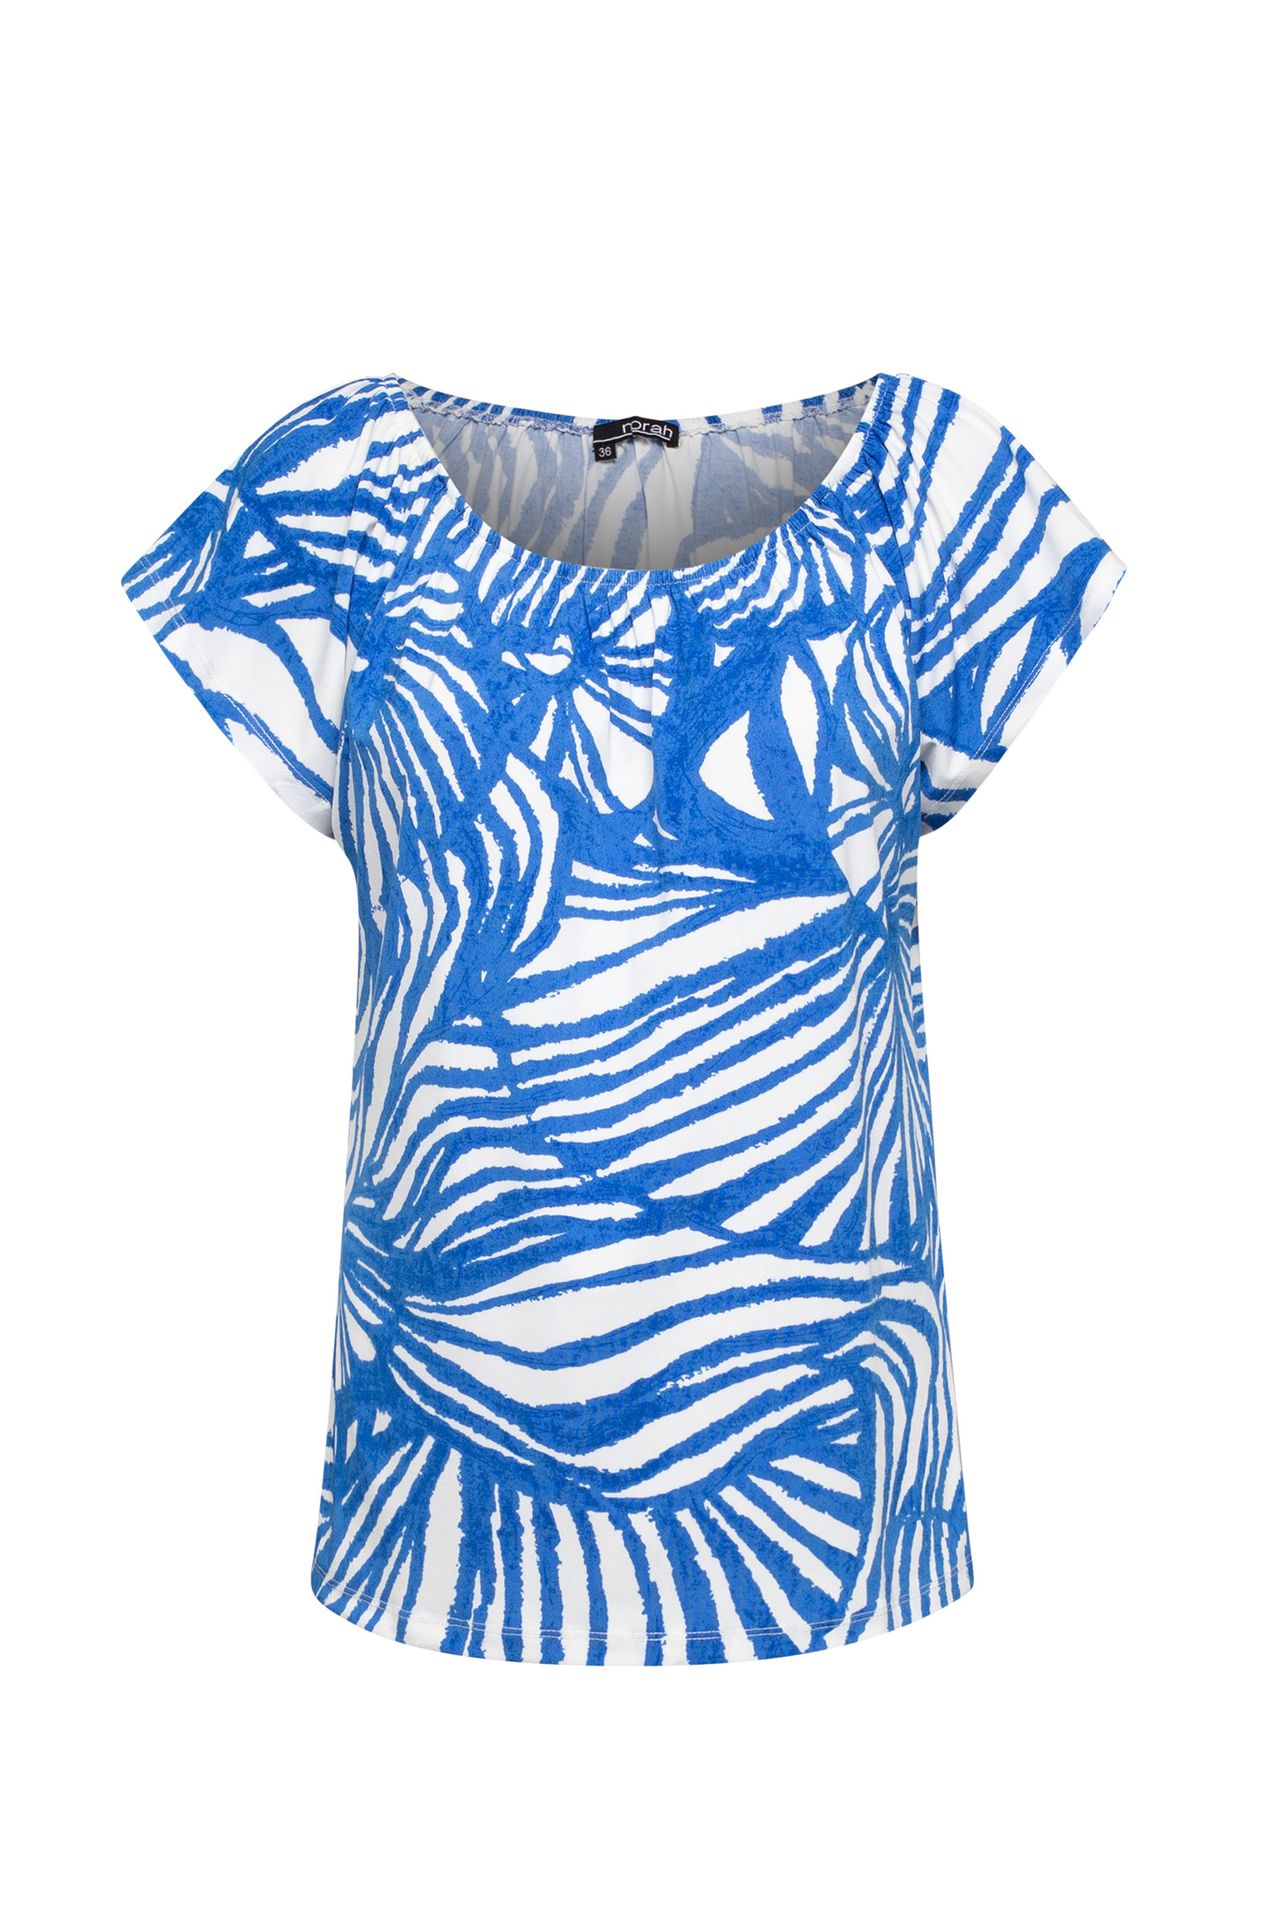 Norah Shirt blauw wit blue/white 212875-431